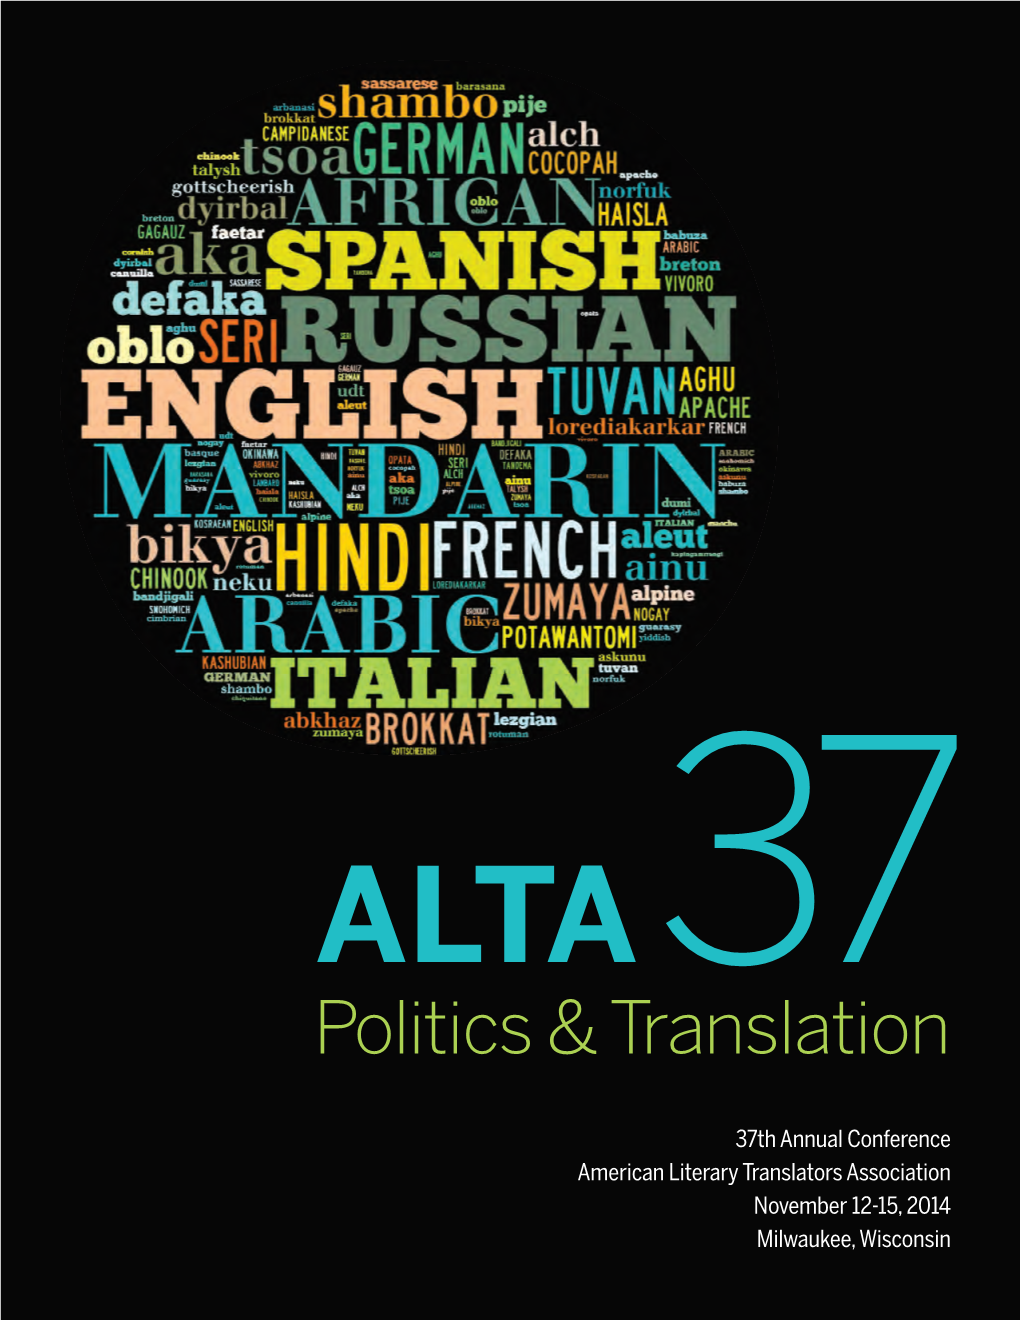 Politics & Translation